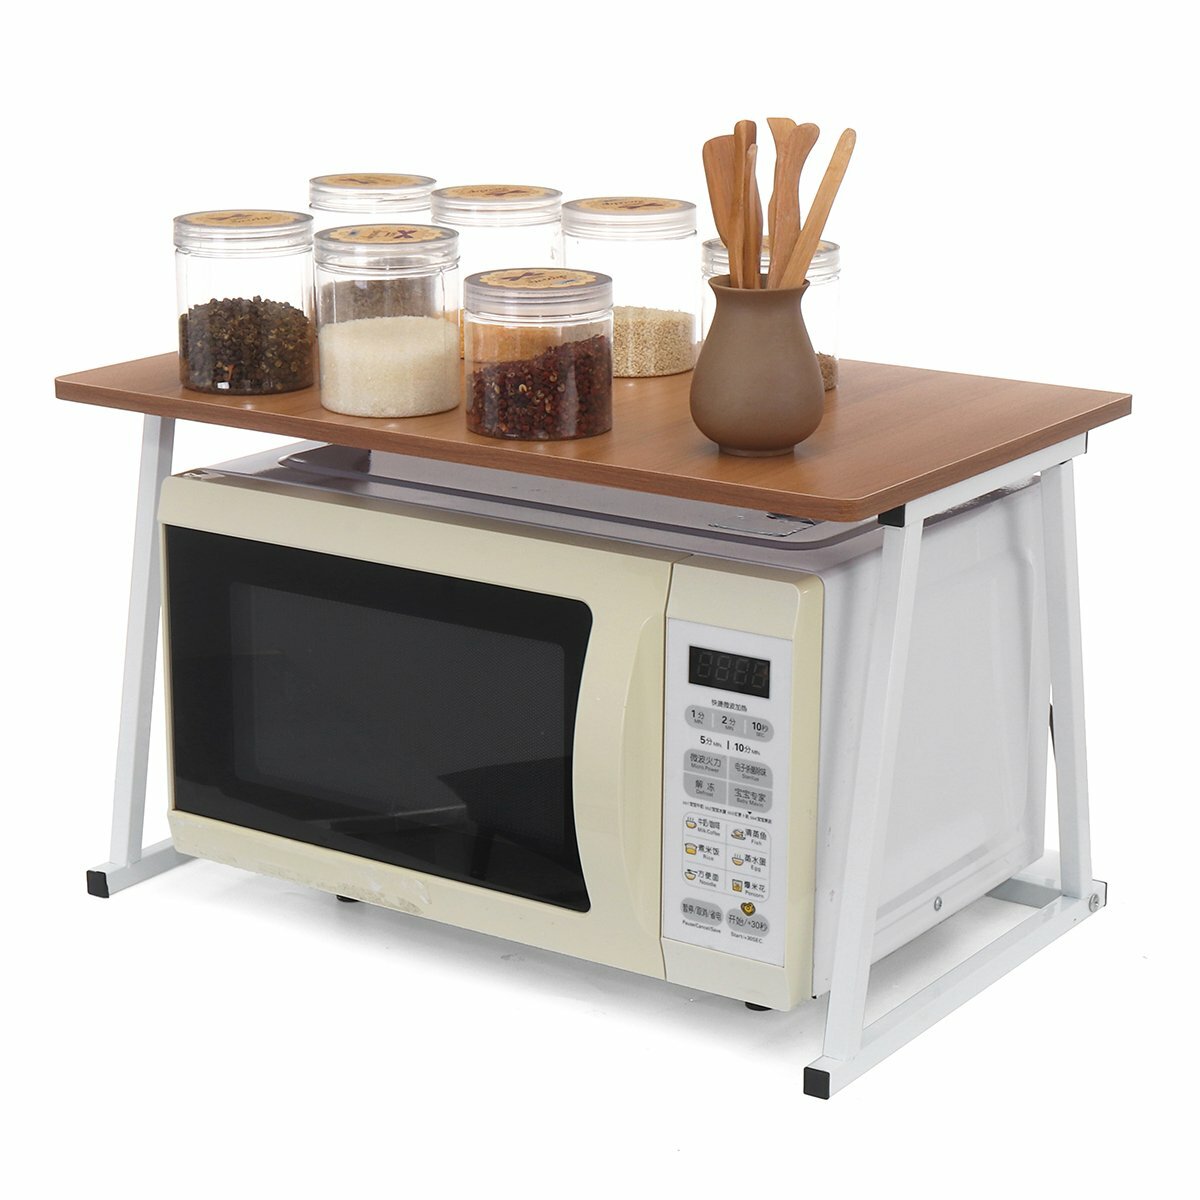 

Microwave Oven Shelf Z-Shaped Kitchen Storage Rack Baker Stand Kitchen Coffee Room Desktop Organizer